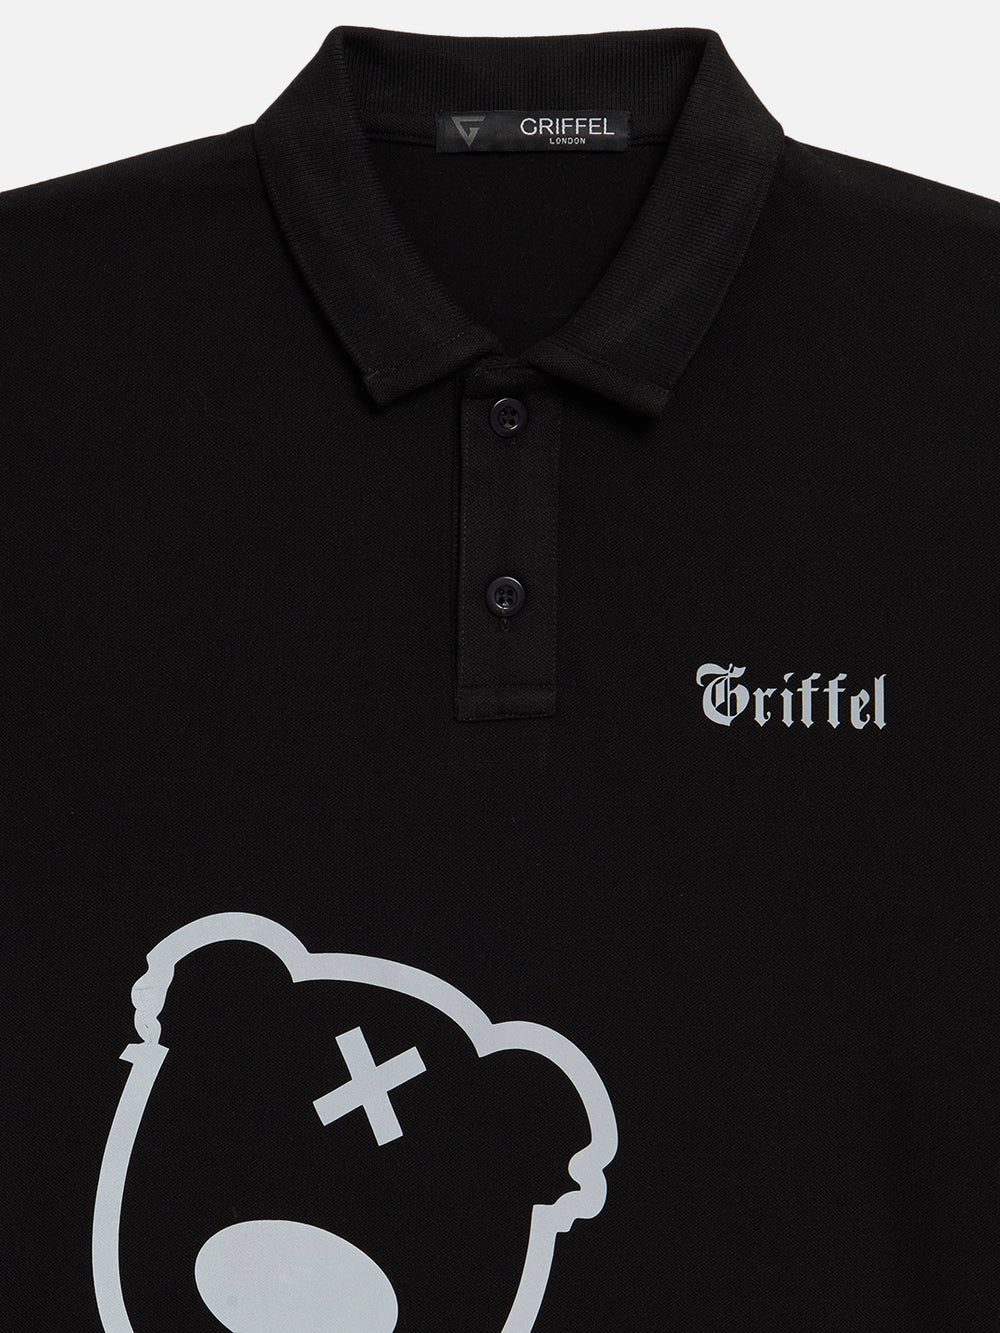 GRIFFEL Boys Kids Black Printed Polo T-shirt - griffel